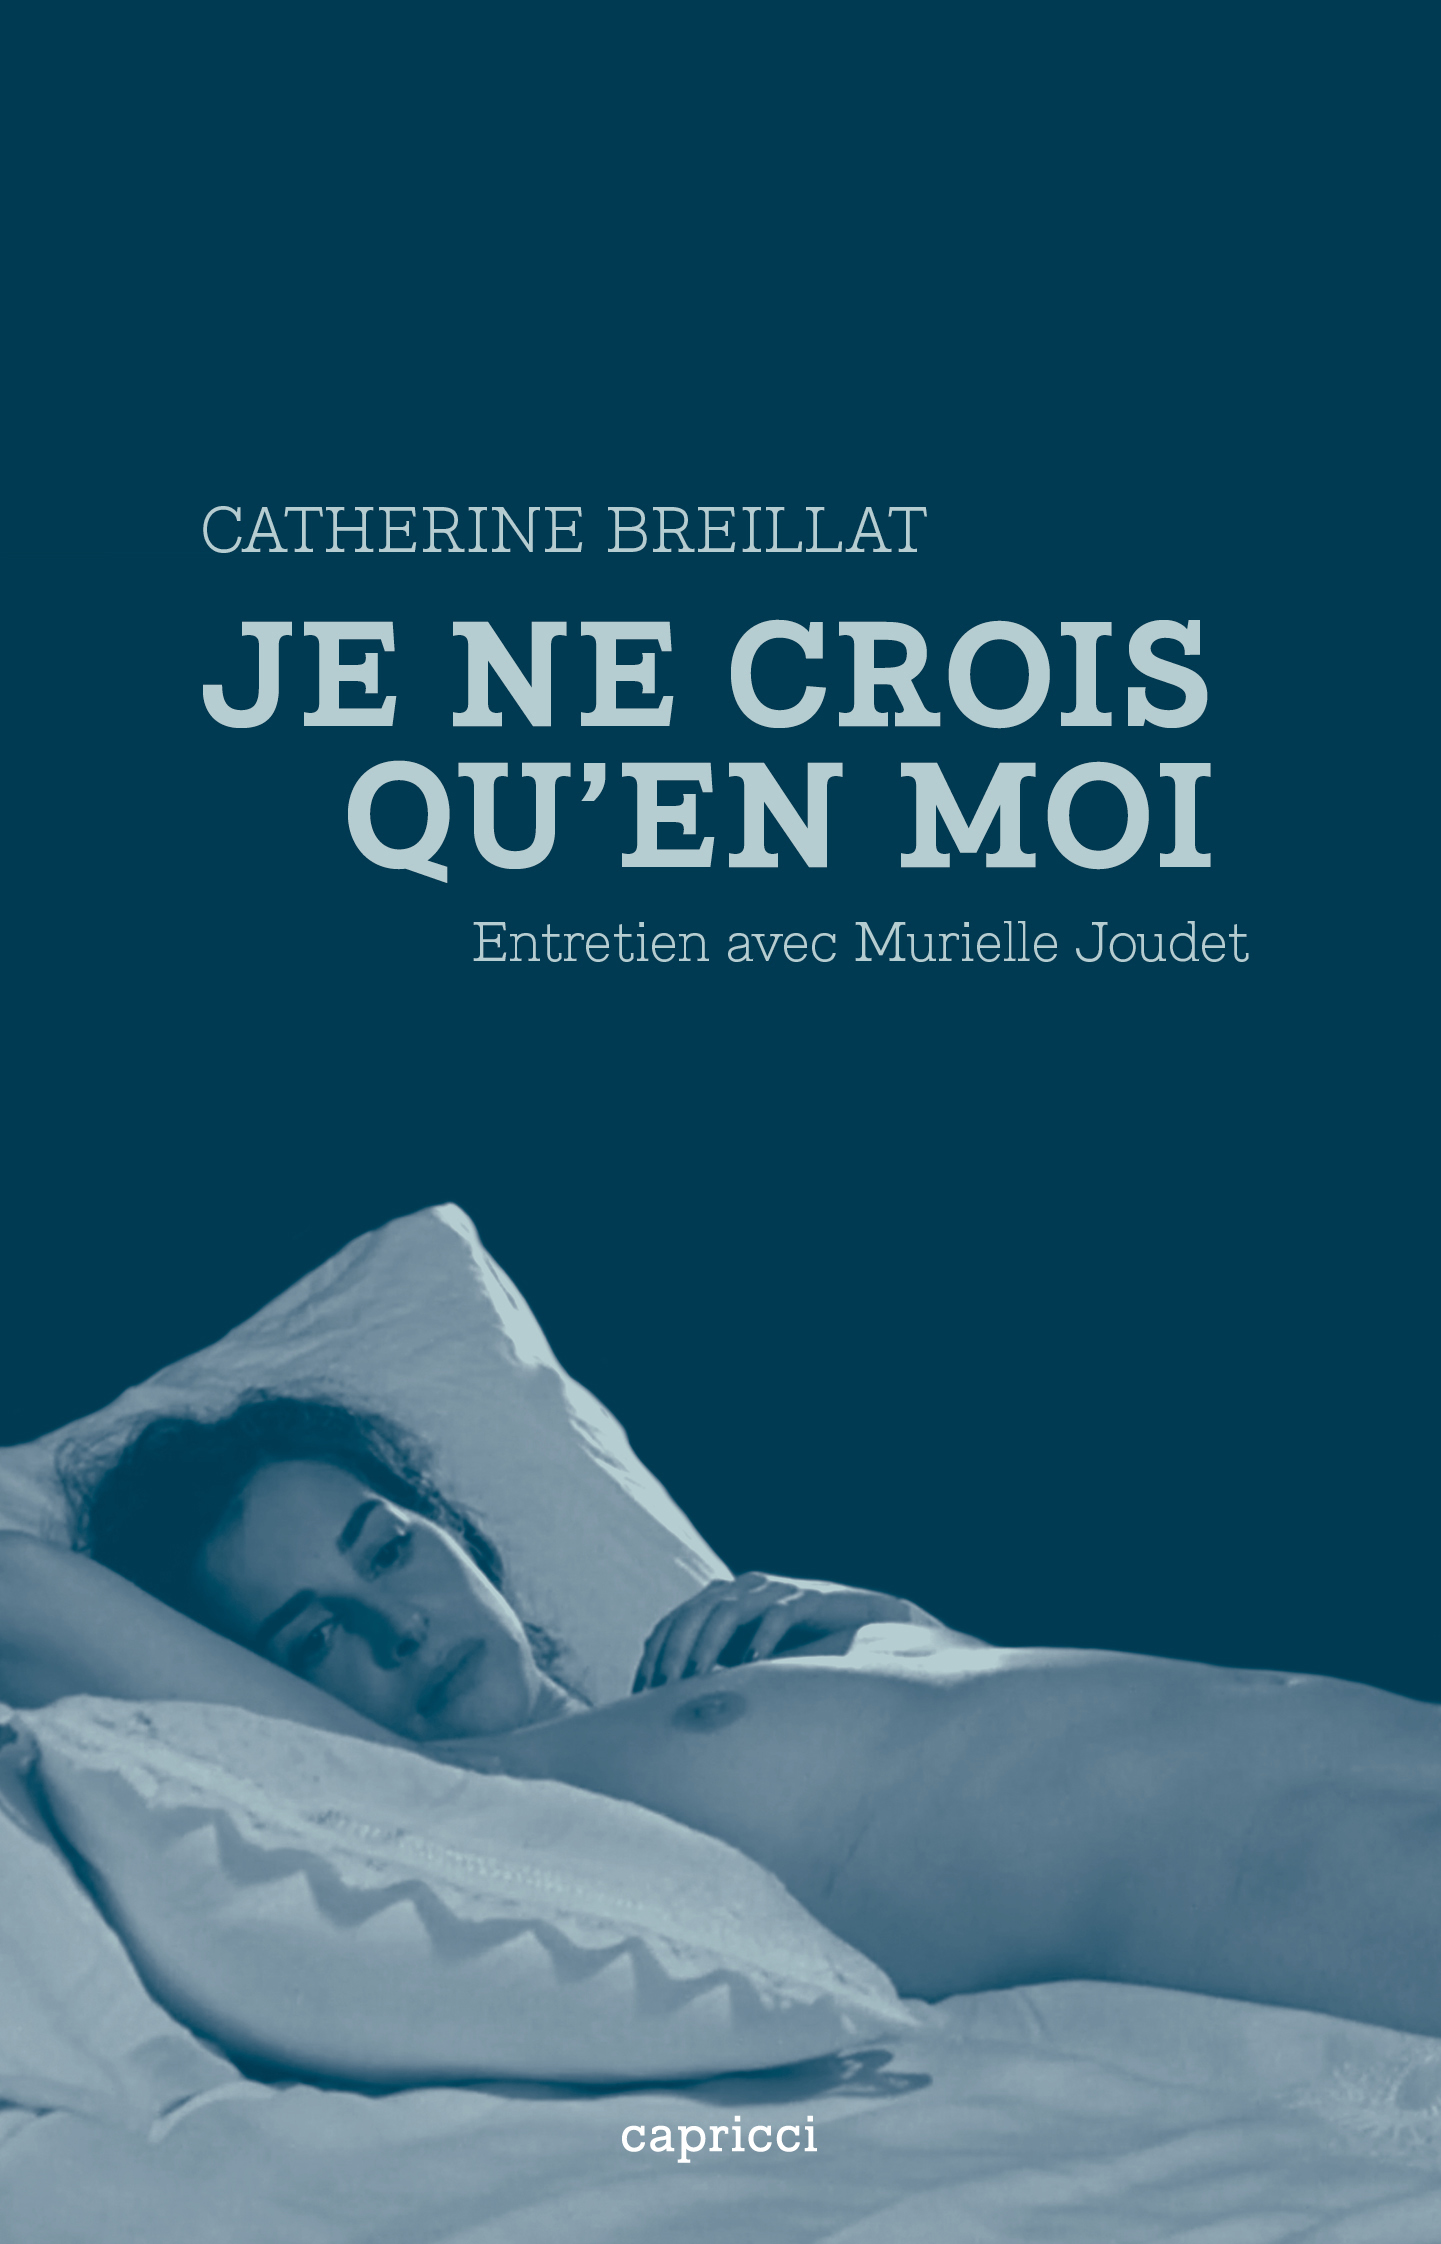 Catherine Breillat – Je ne crois qu’en moi